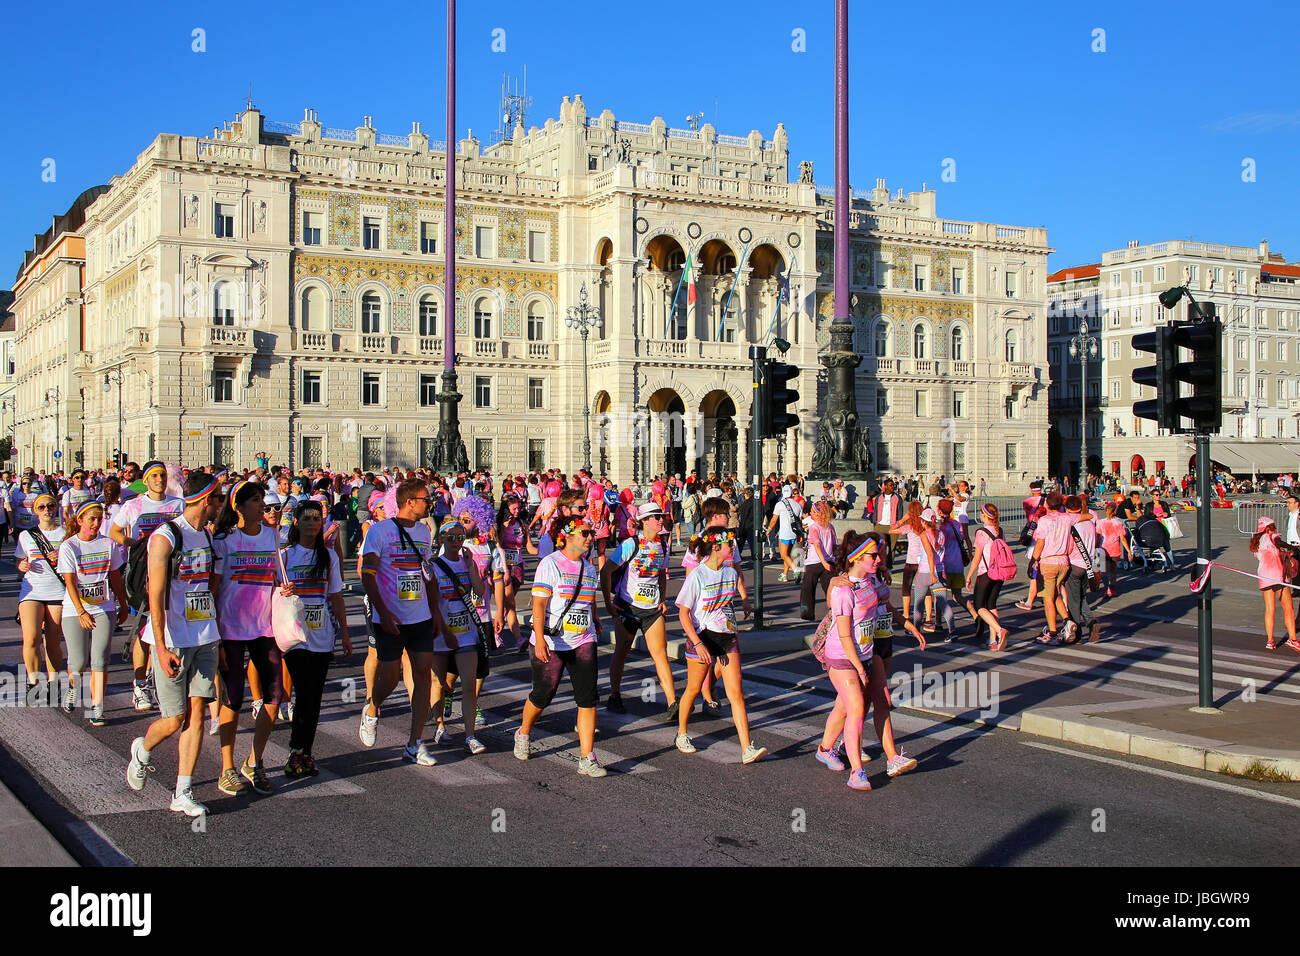 People taking part in The Color Run in Trieste, Italy. Trieste is the capital of the autonomous region Friuli-Venezia Giulia Stock Photo